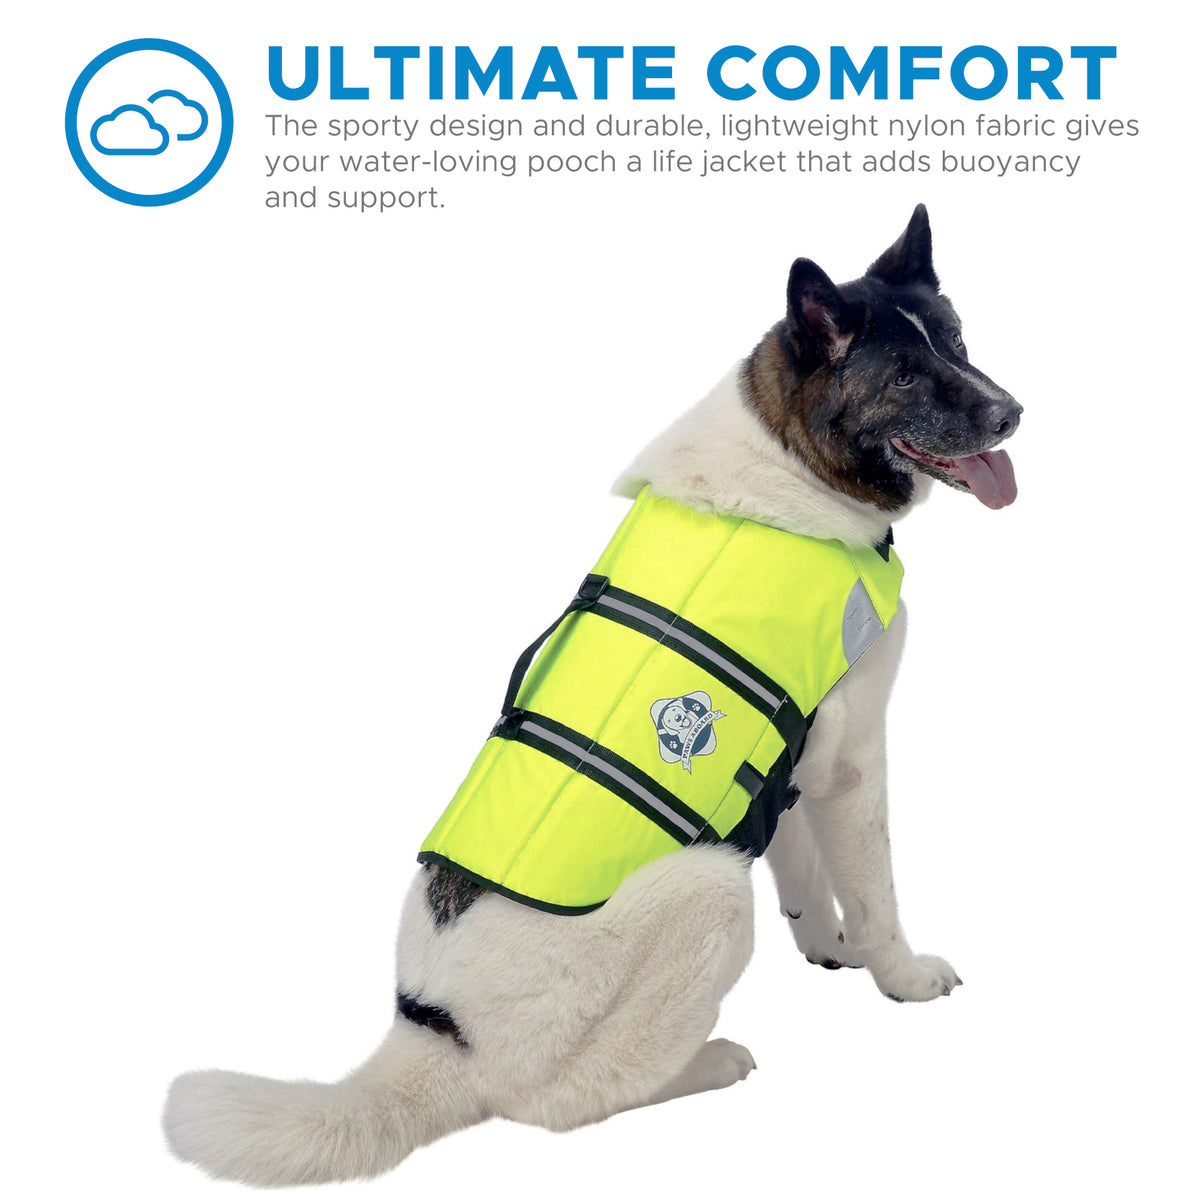 Paws Aboard Neon Yellow Neoprene Pet Life Vest